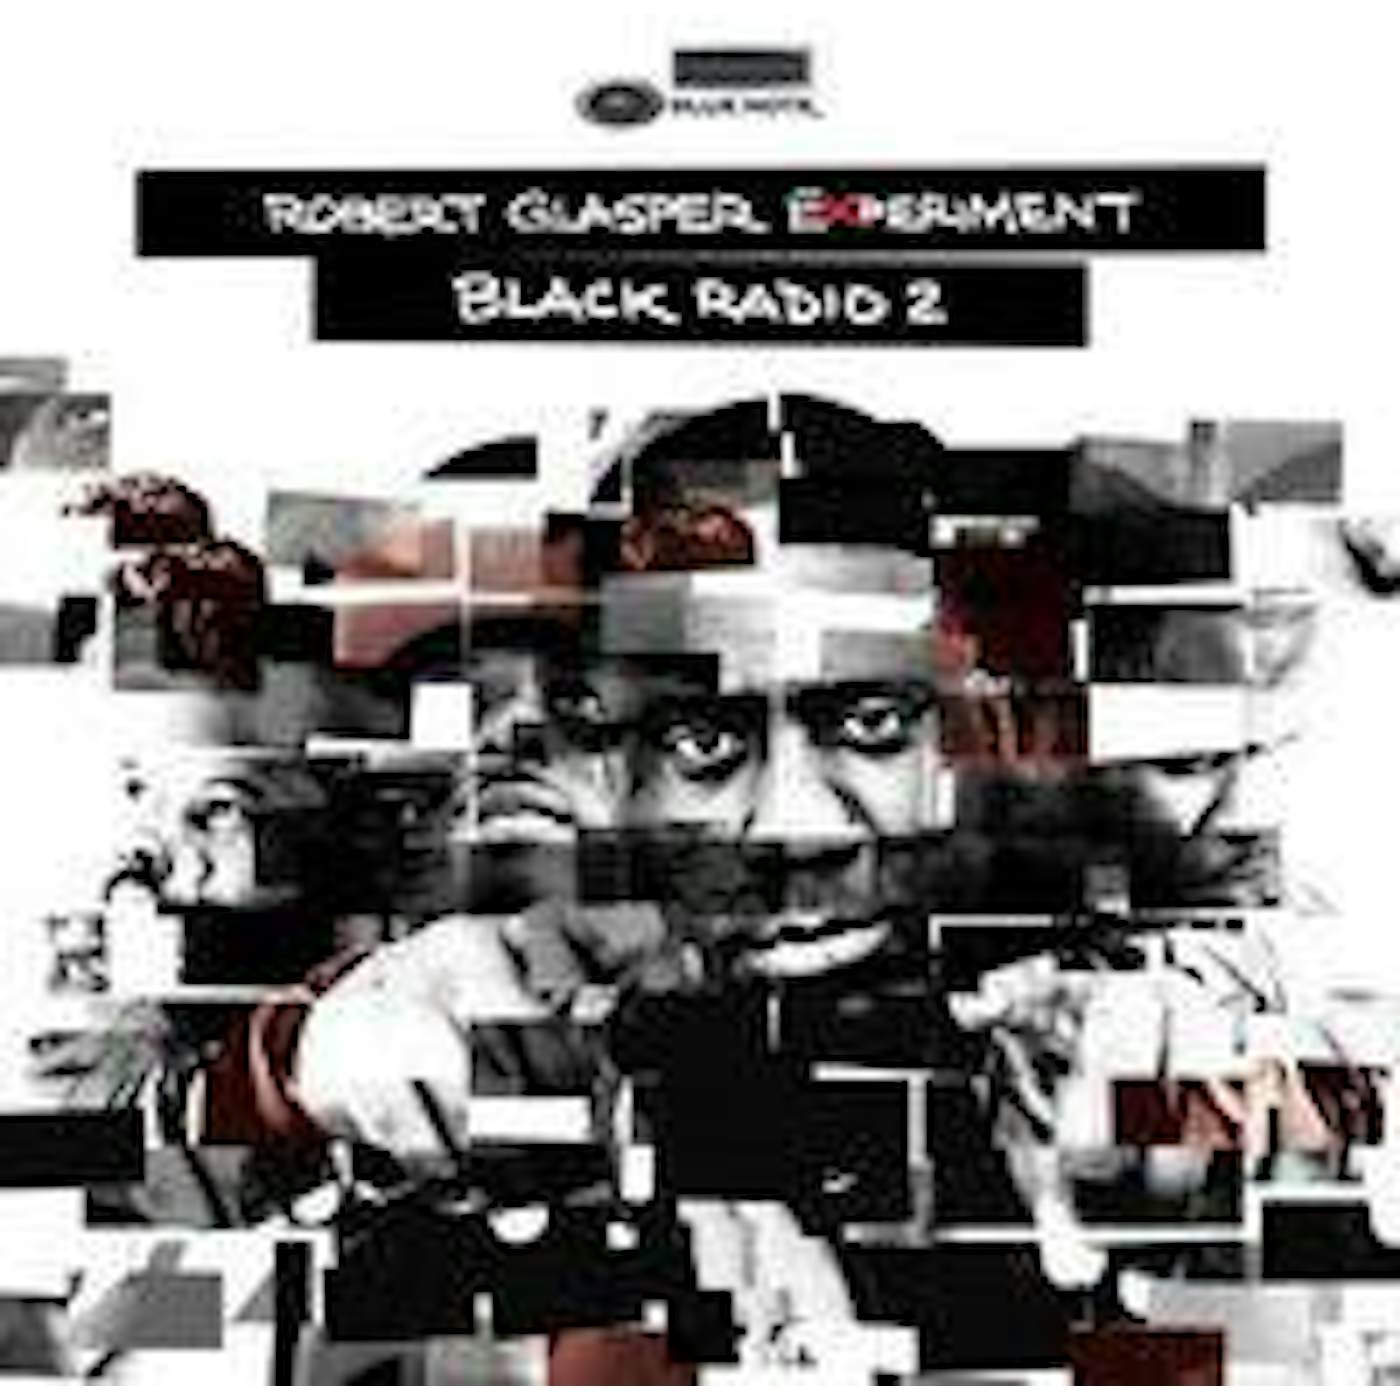 Robert Glasper BLACK RADIO 2 Vinyl Record